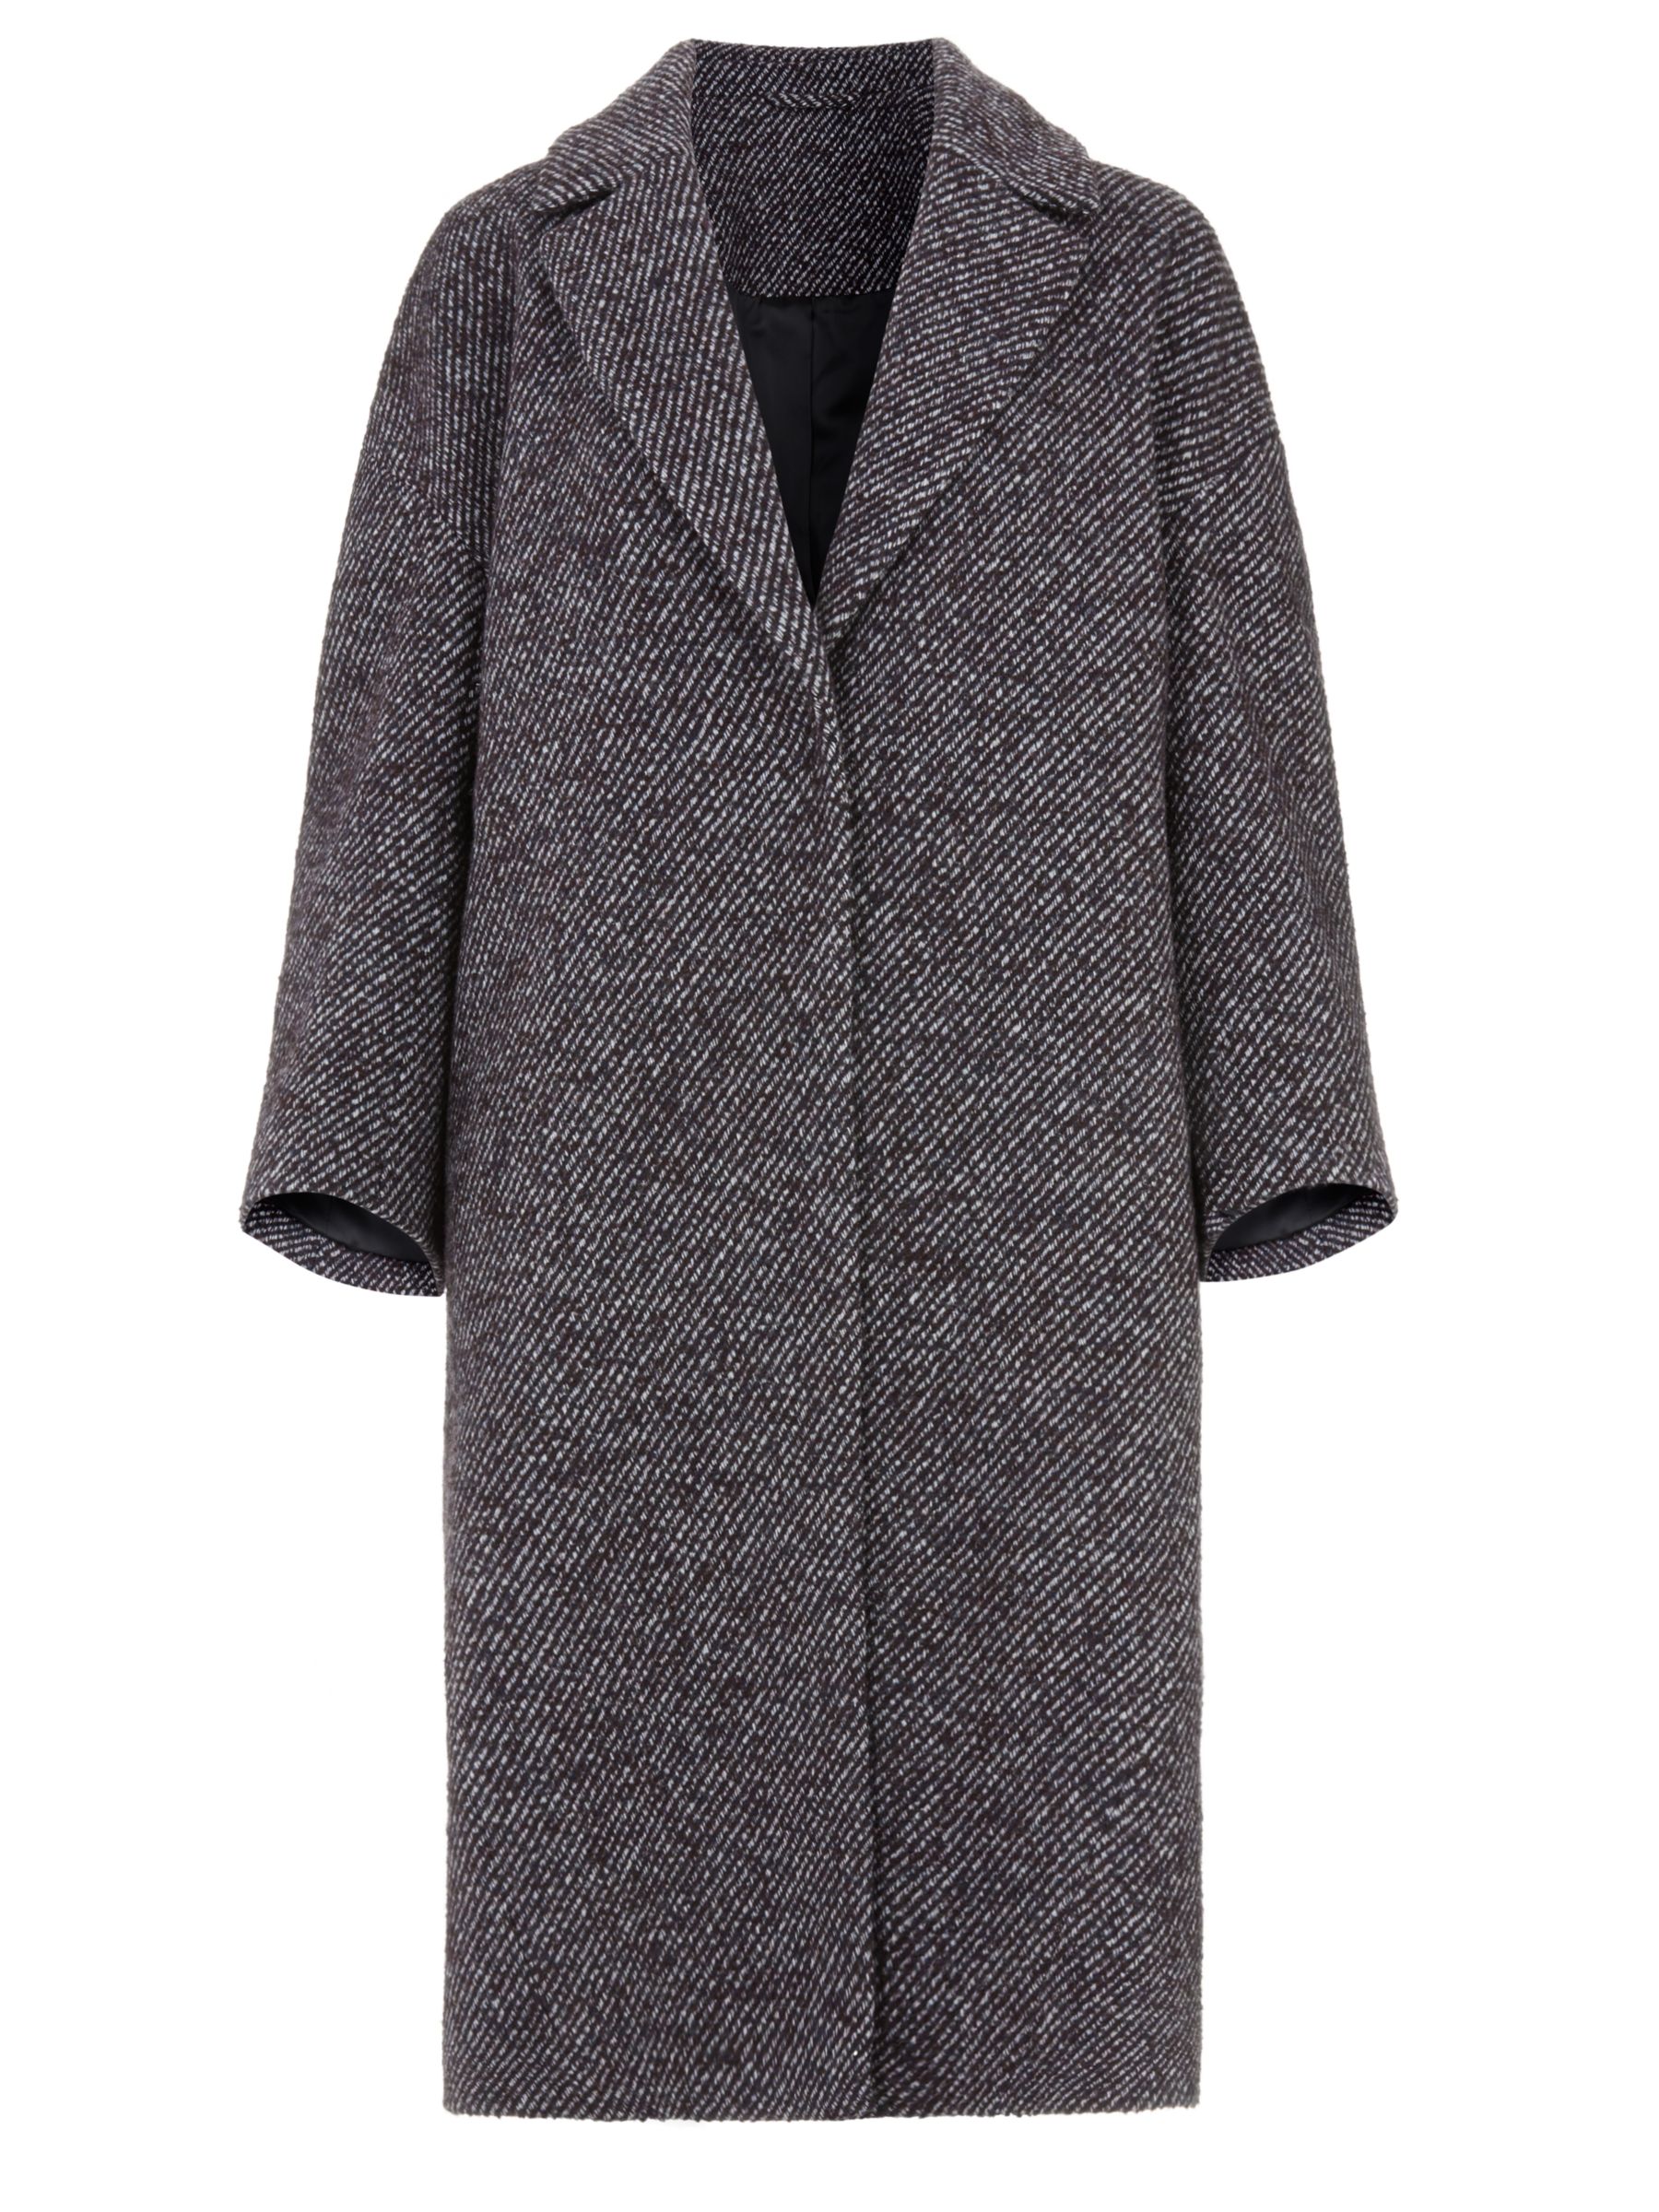 Kin Cocoon Coat, Grey/Multi at John Lewis & Partners